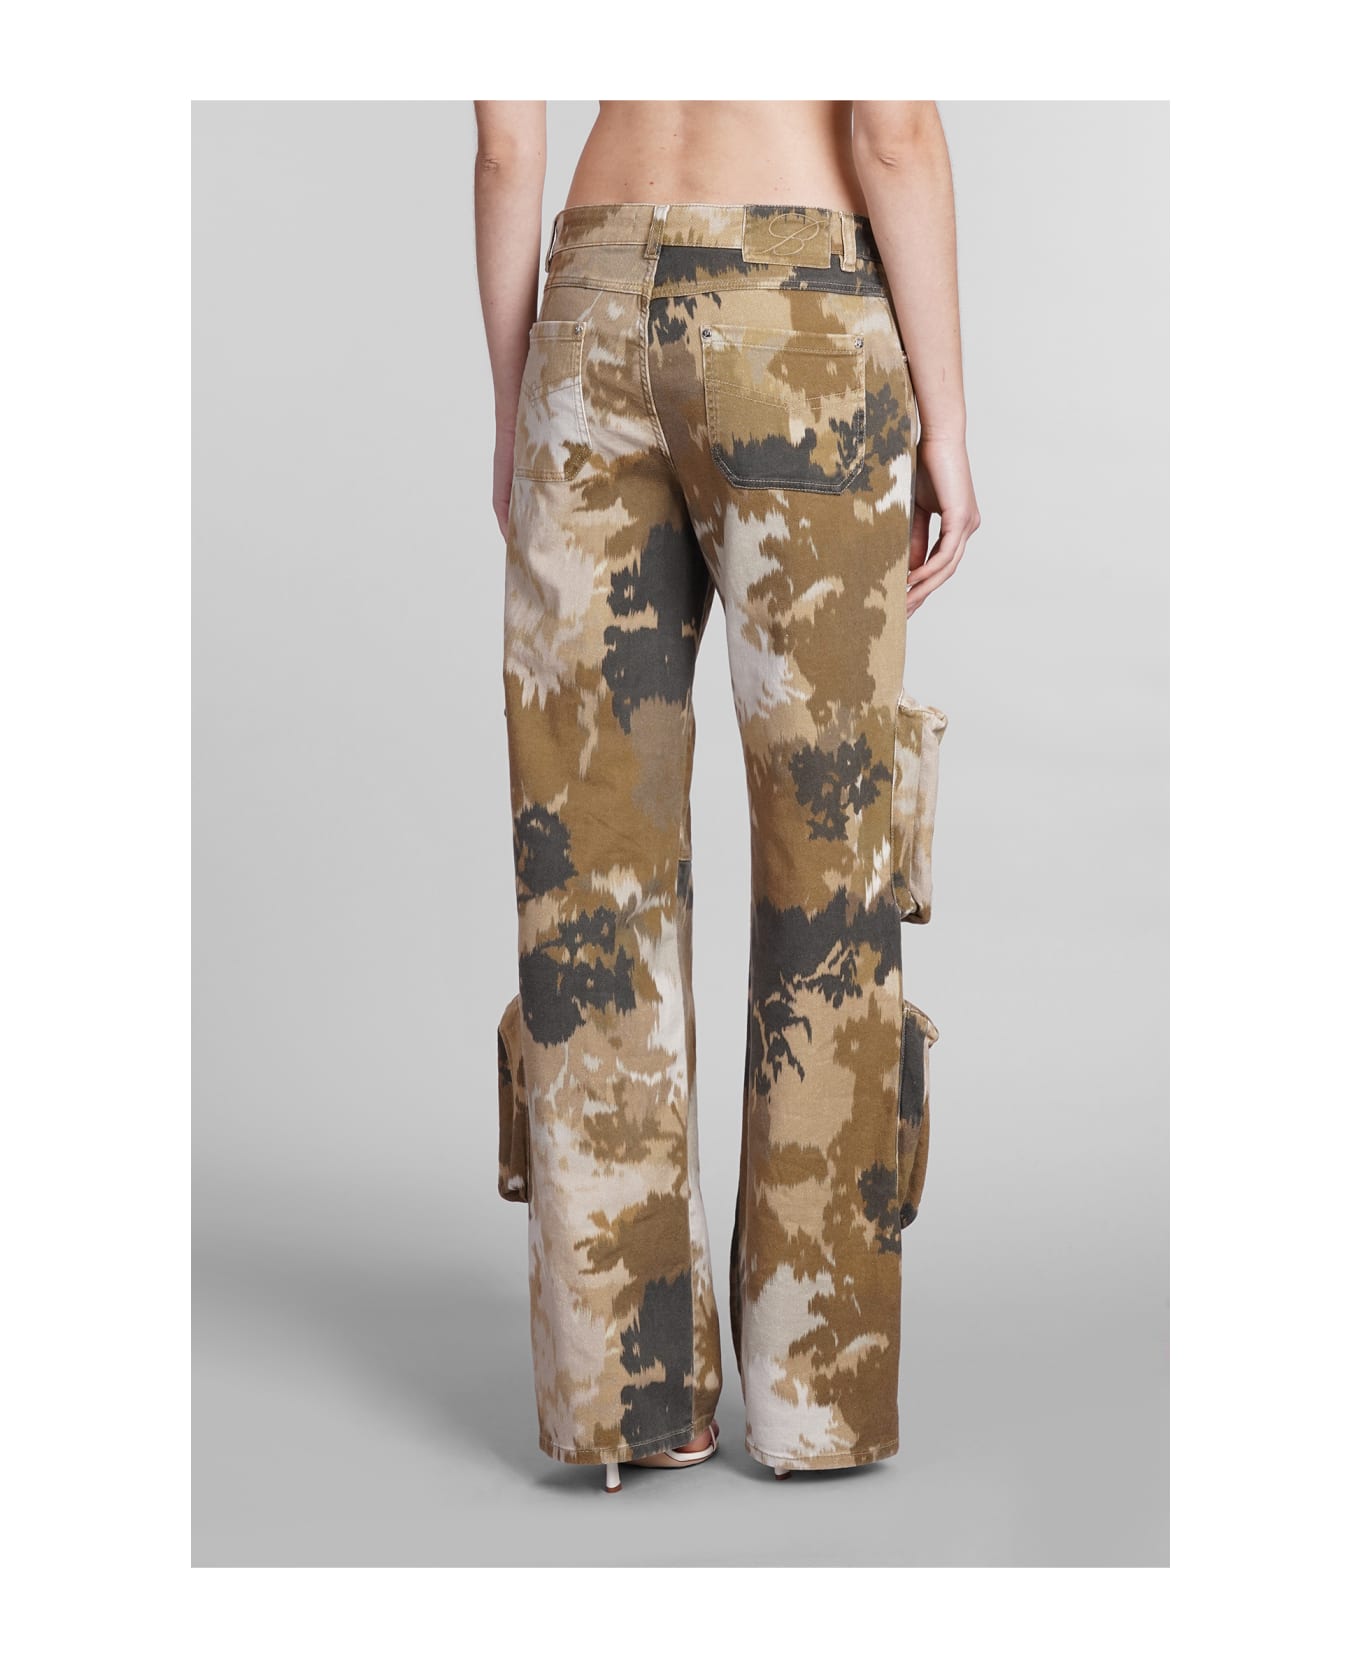 Blumarine Pants In Camouflage Cotton - Camoscio amphora ボトムス